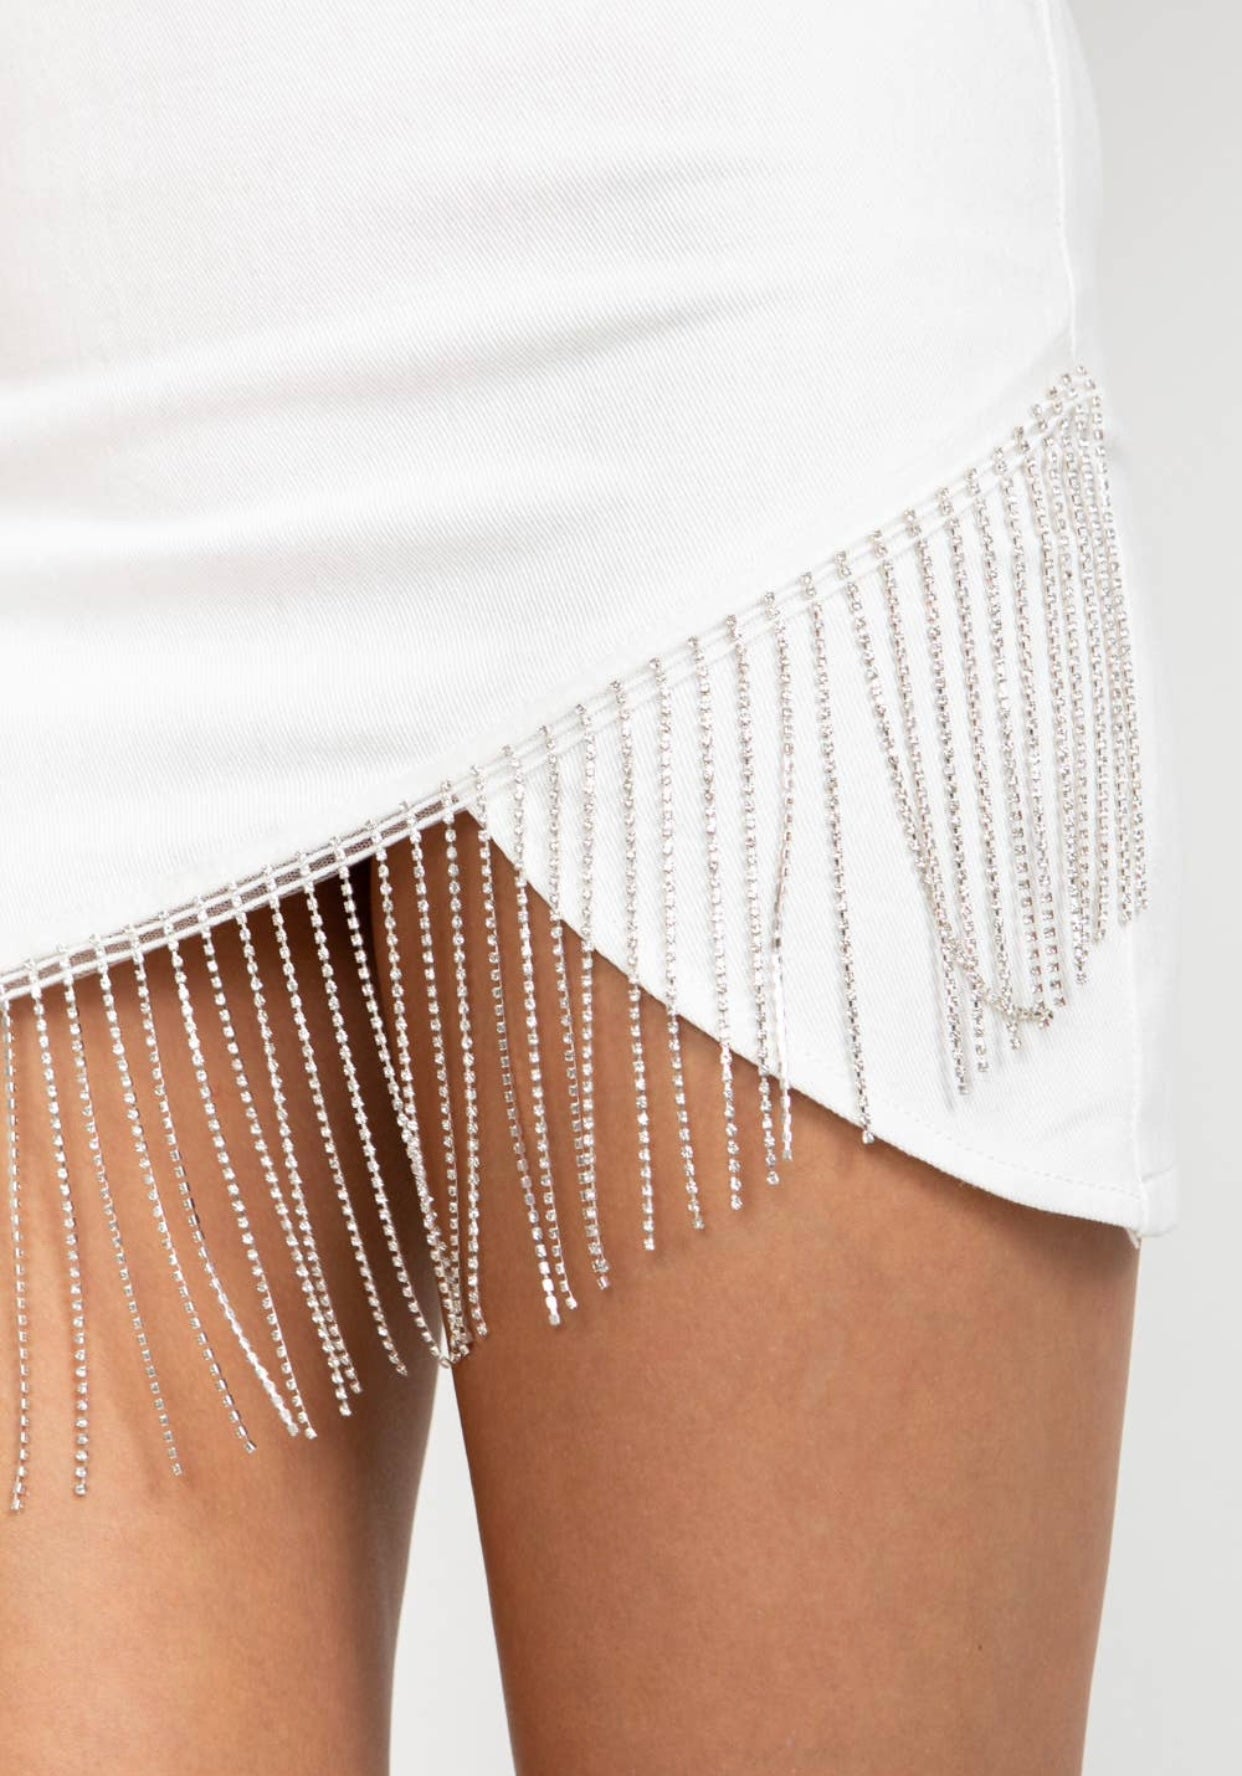 White jean skirt with Rhinestone fringe